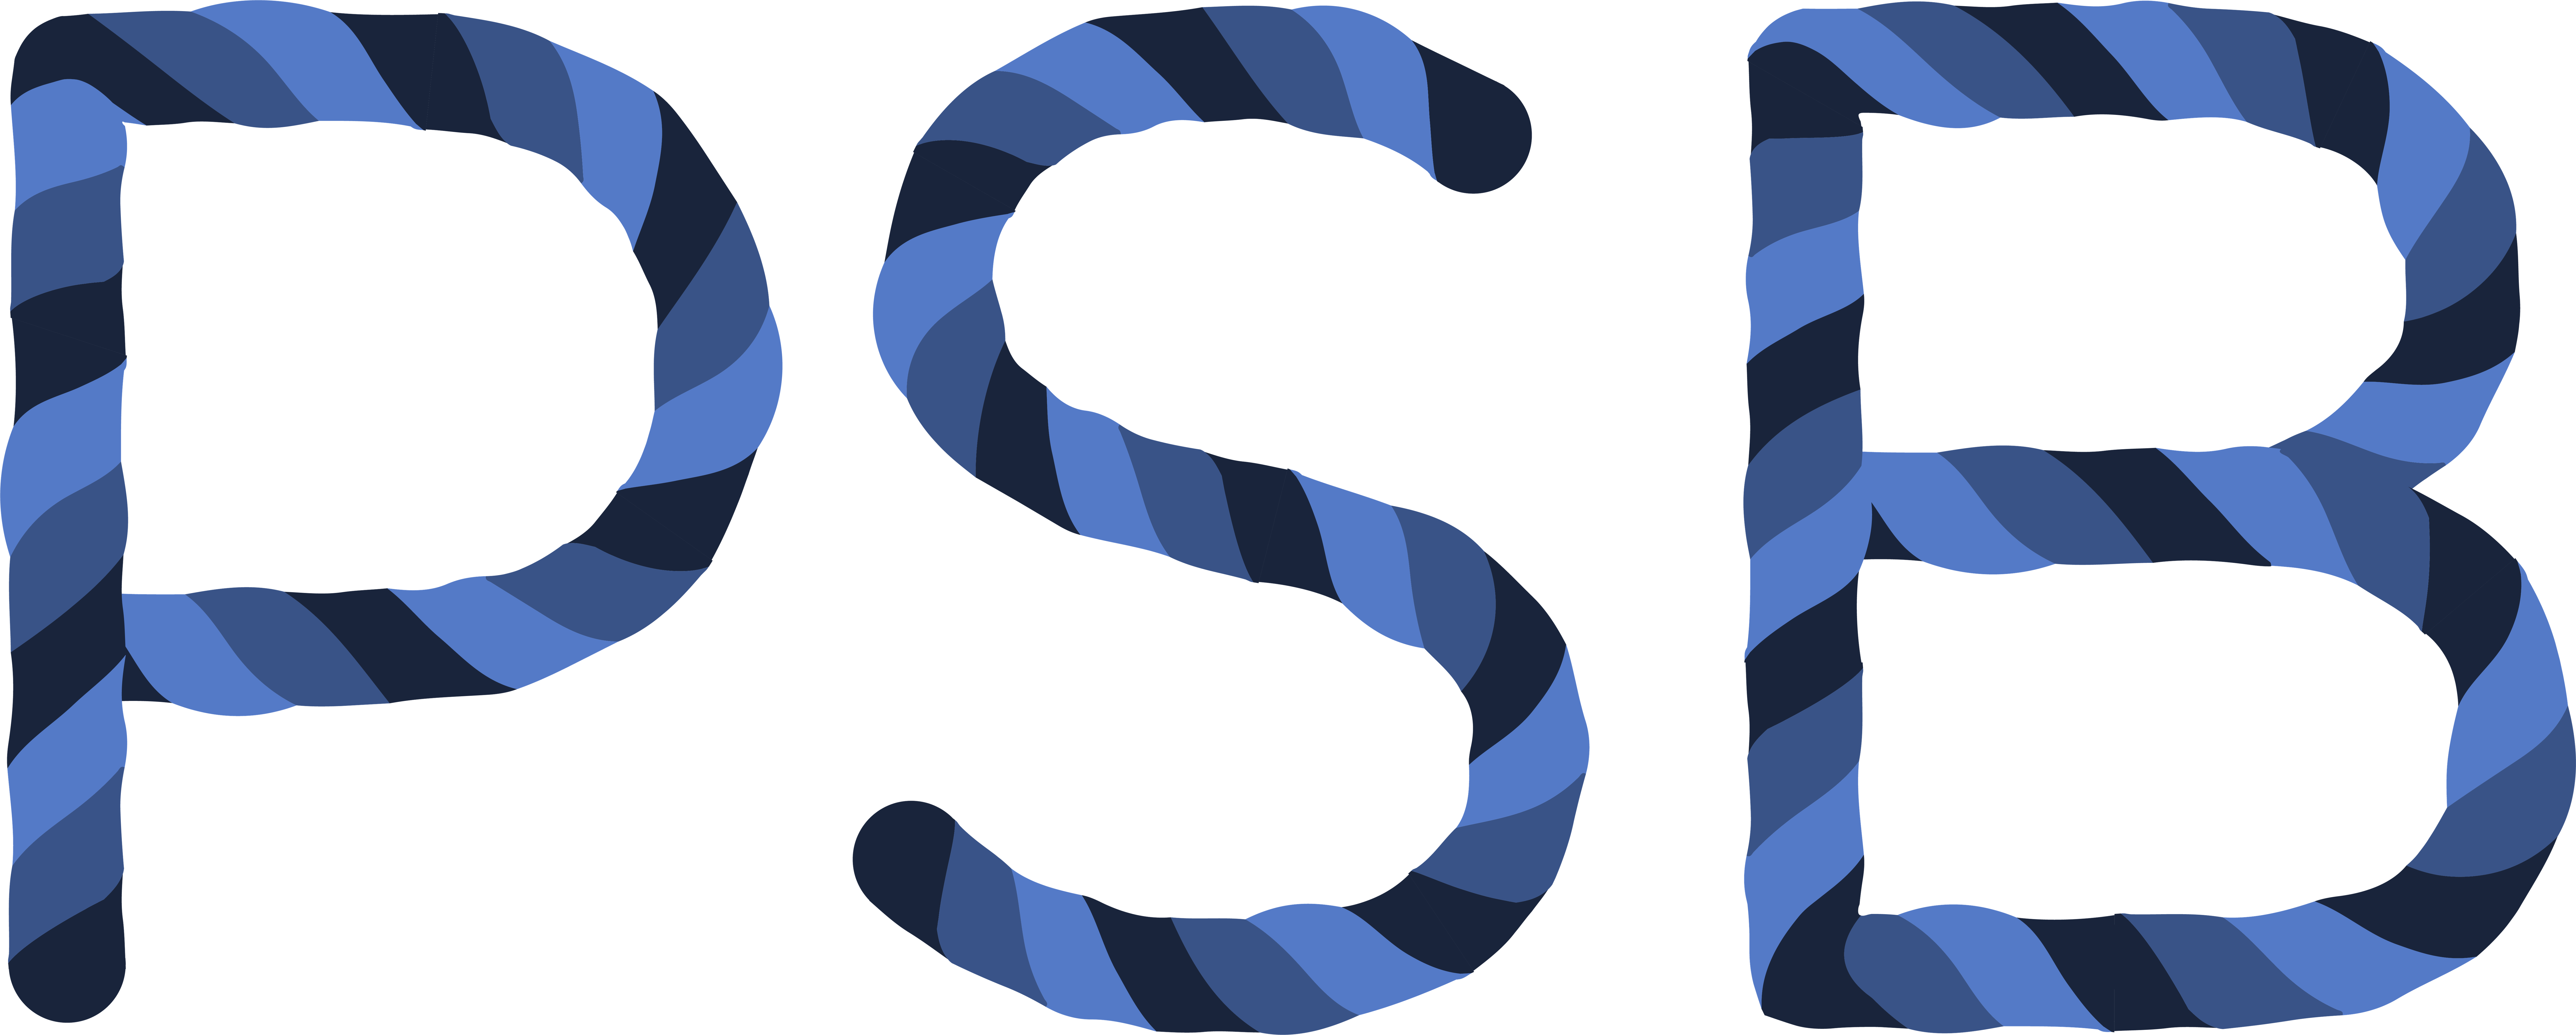 PSB logo